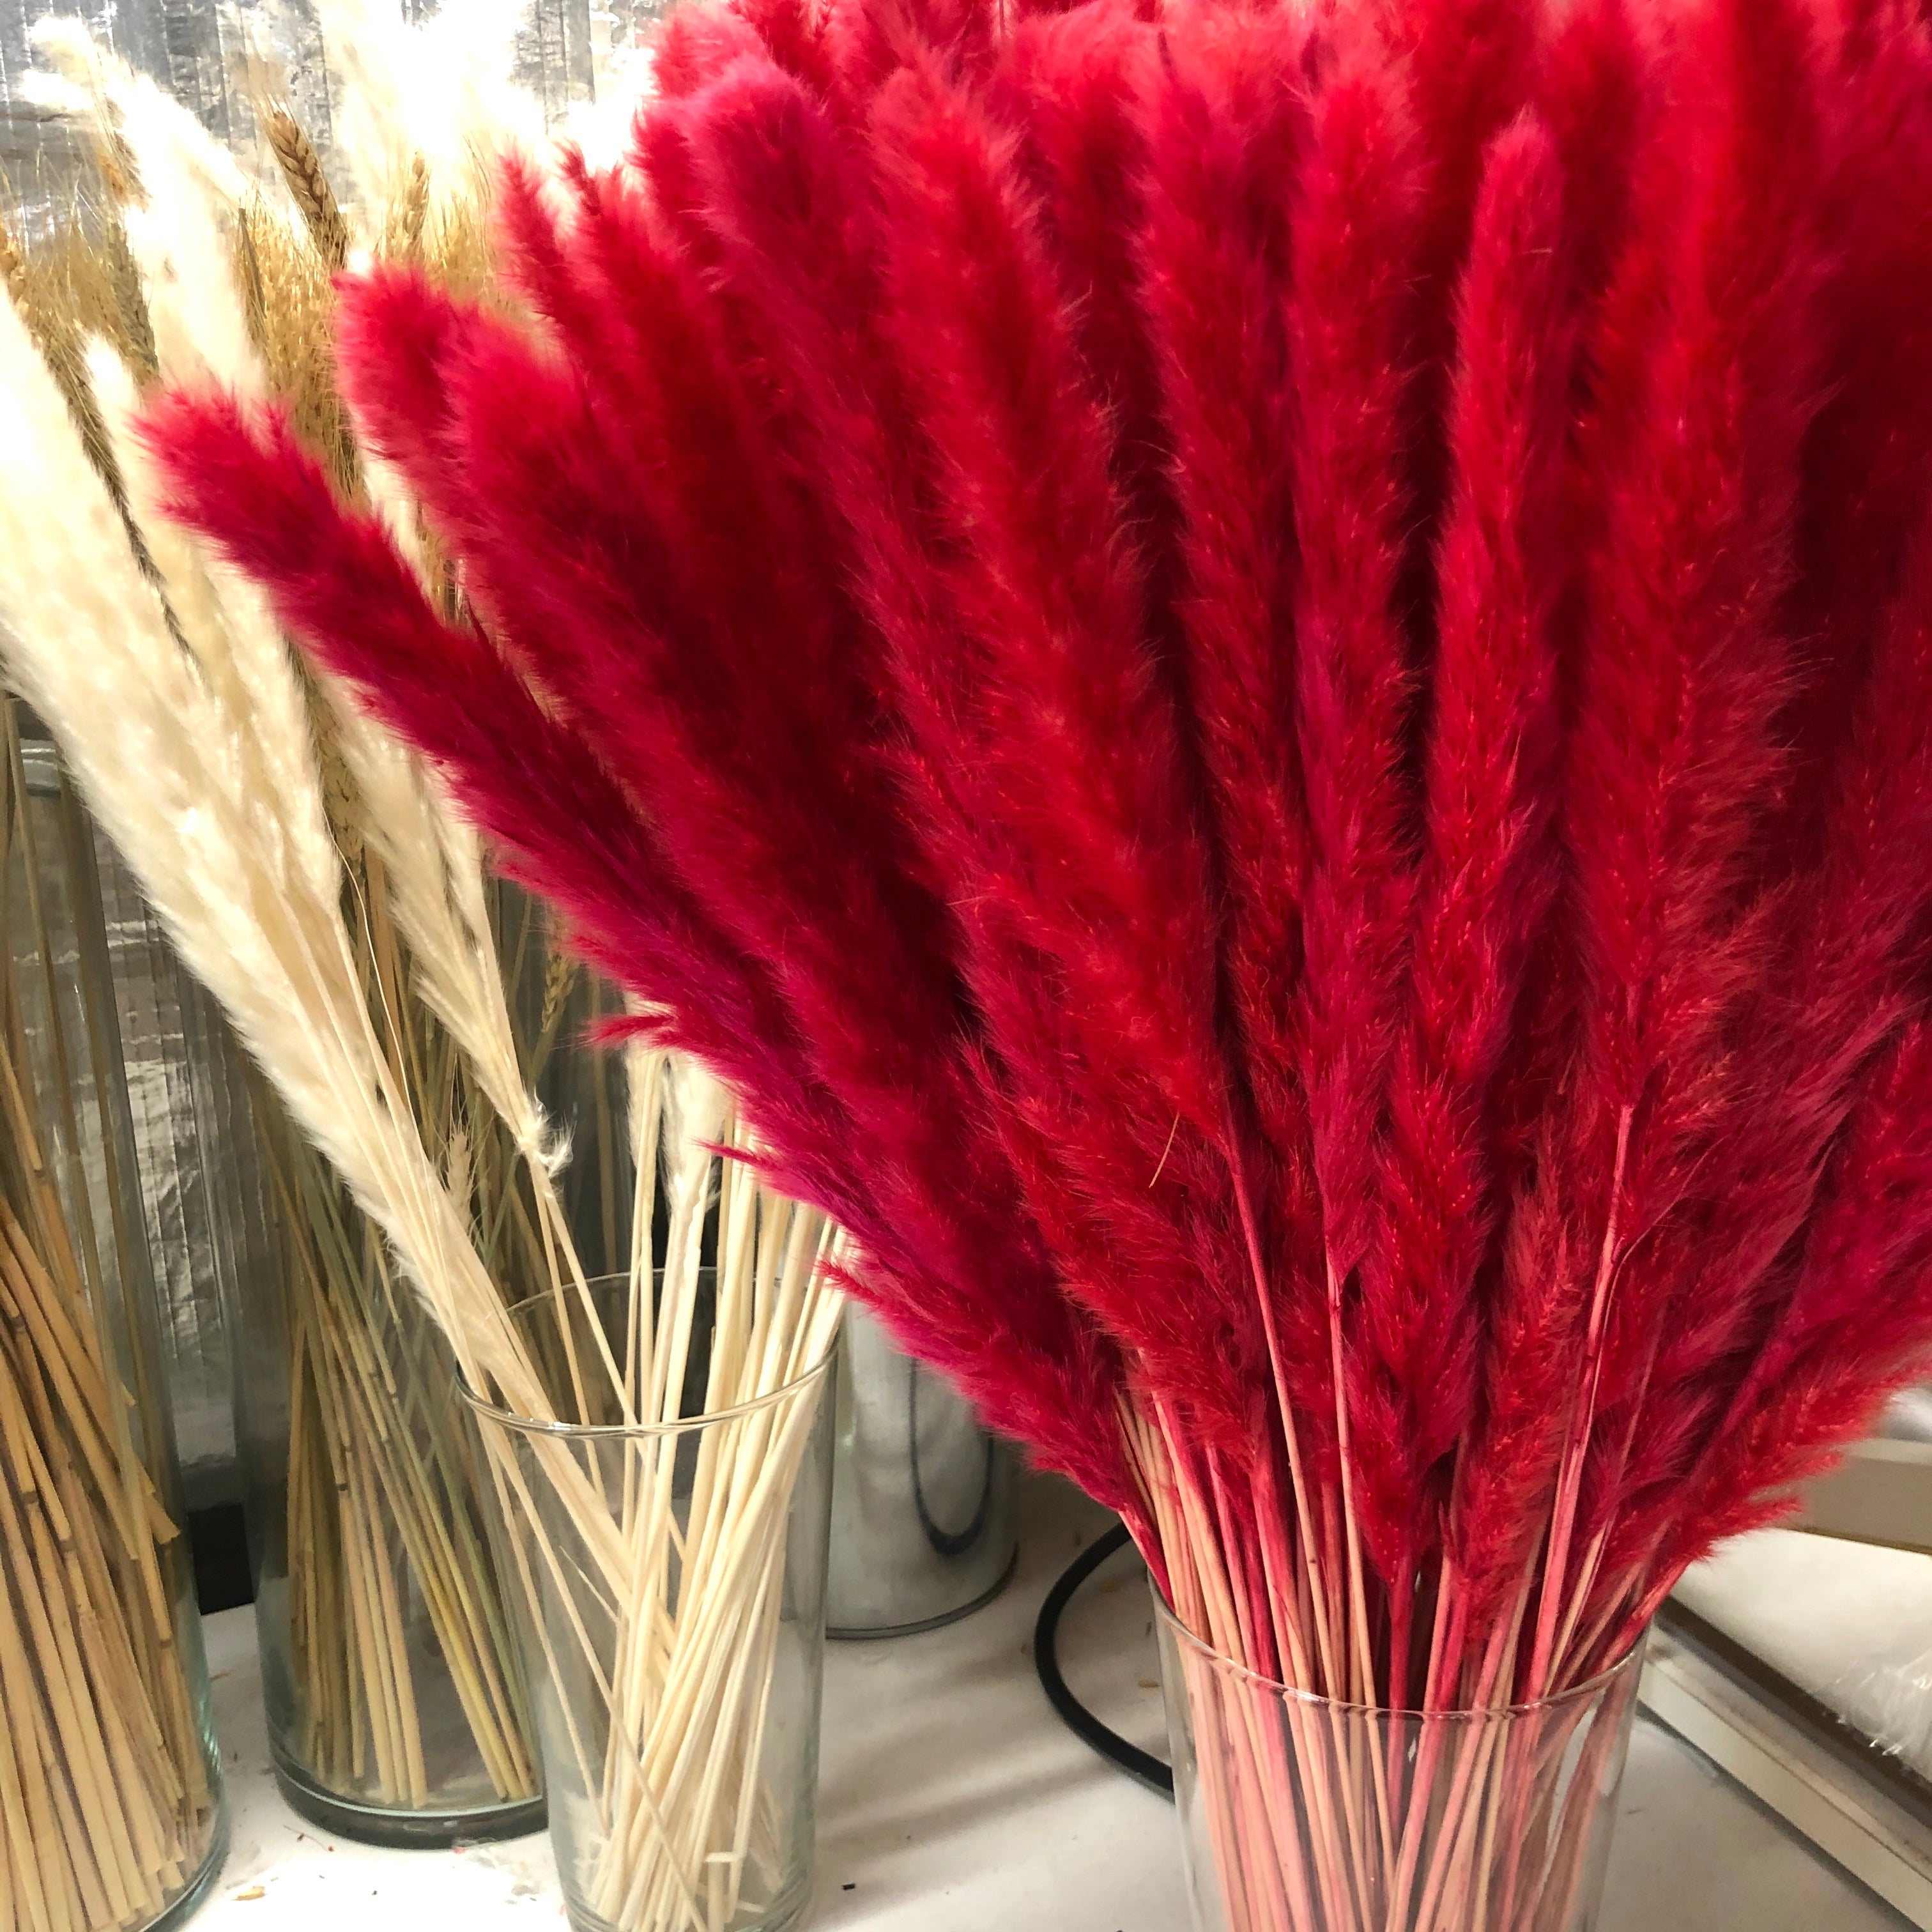 Dried Reed Blady Flower Grass 40-50cm Stem - Red